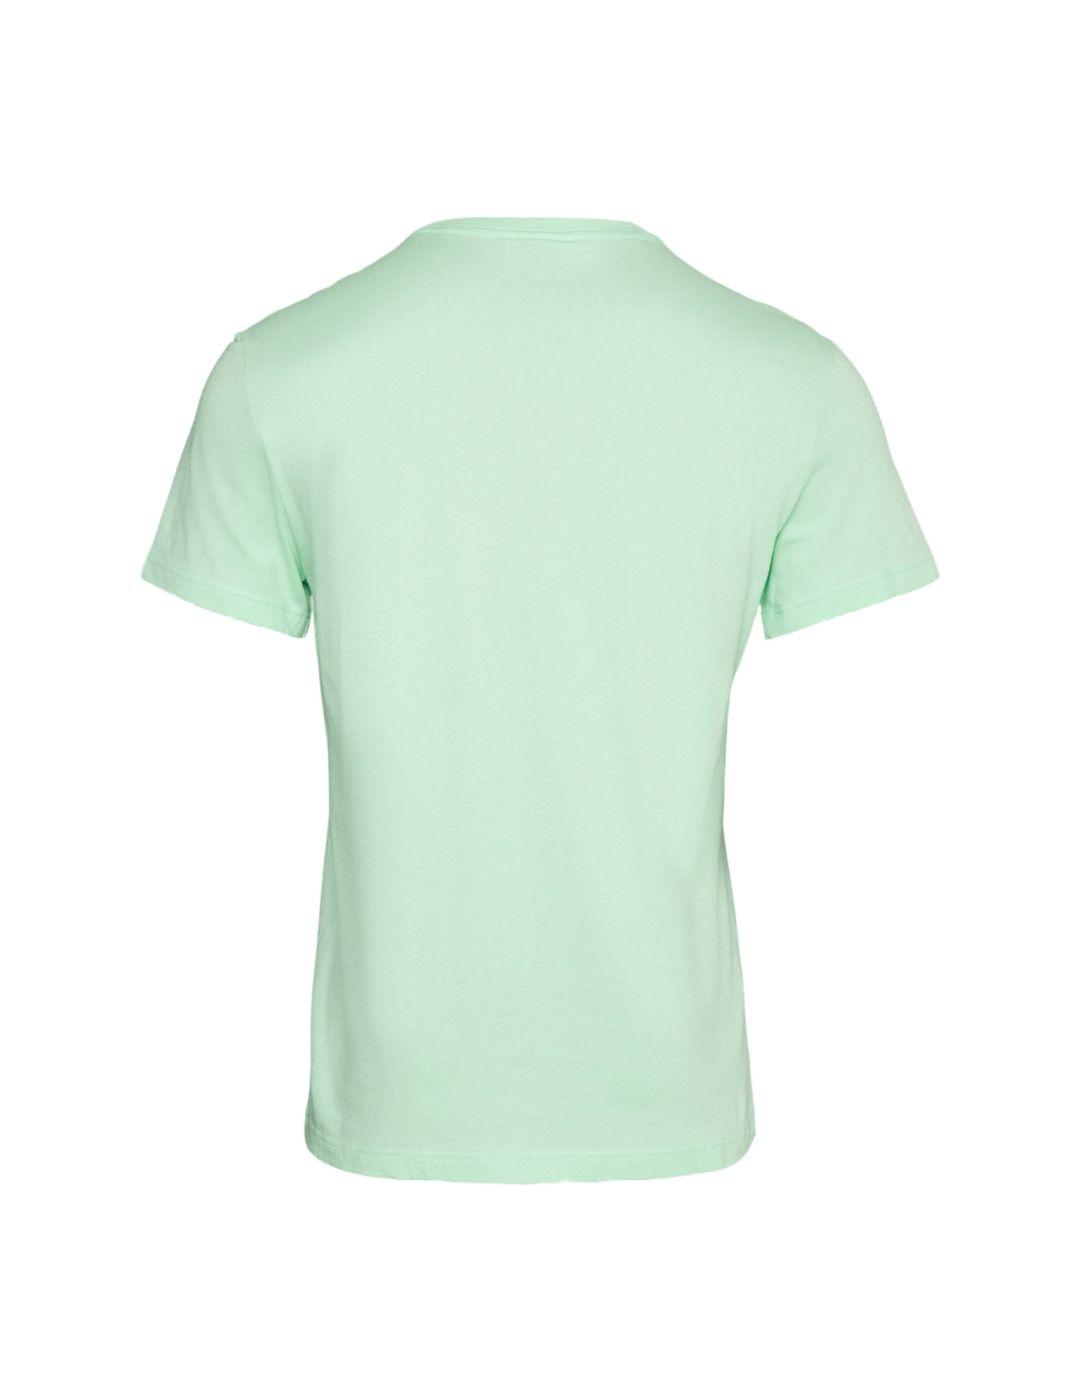 Camiseta Lacoste verde de hombre-b